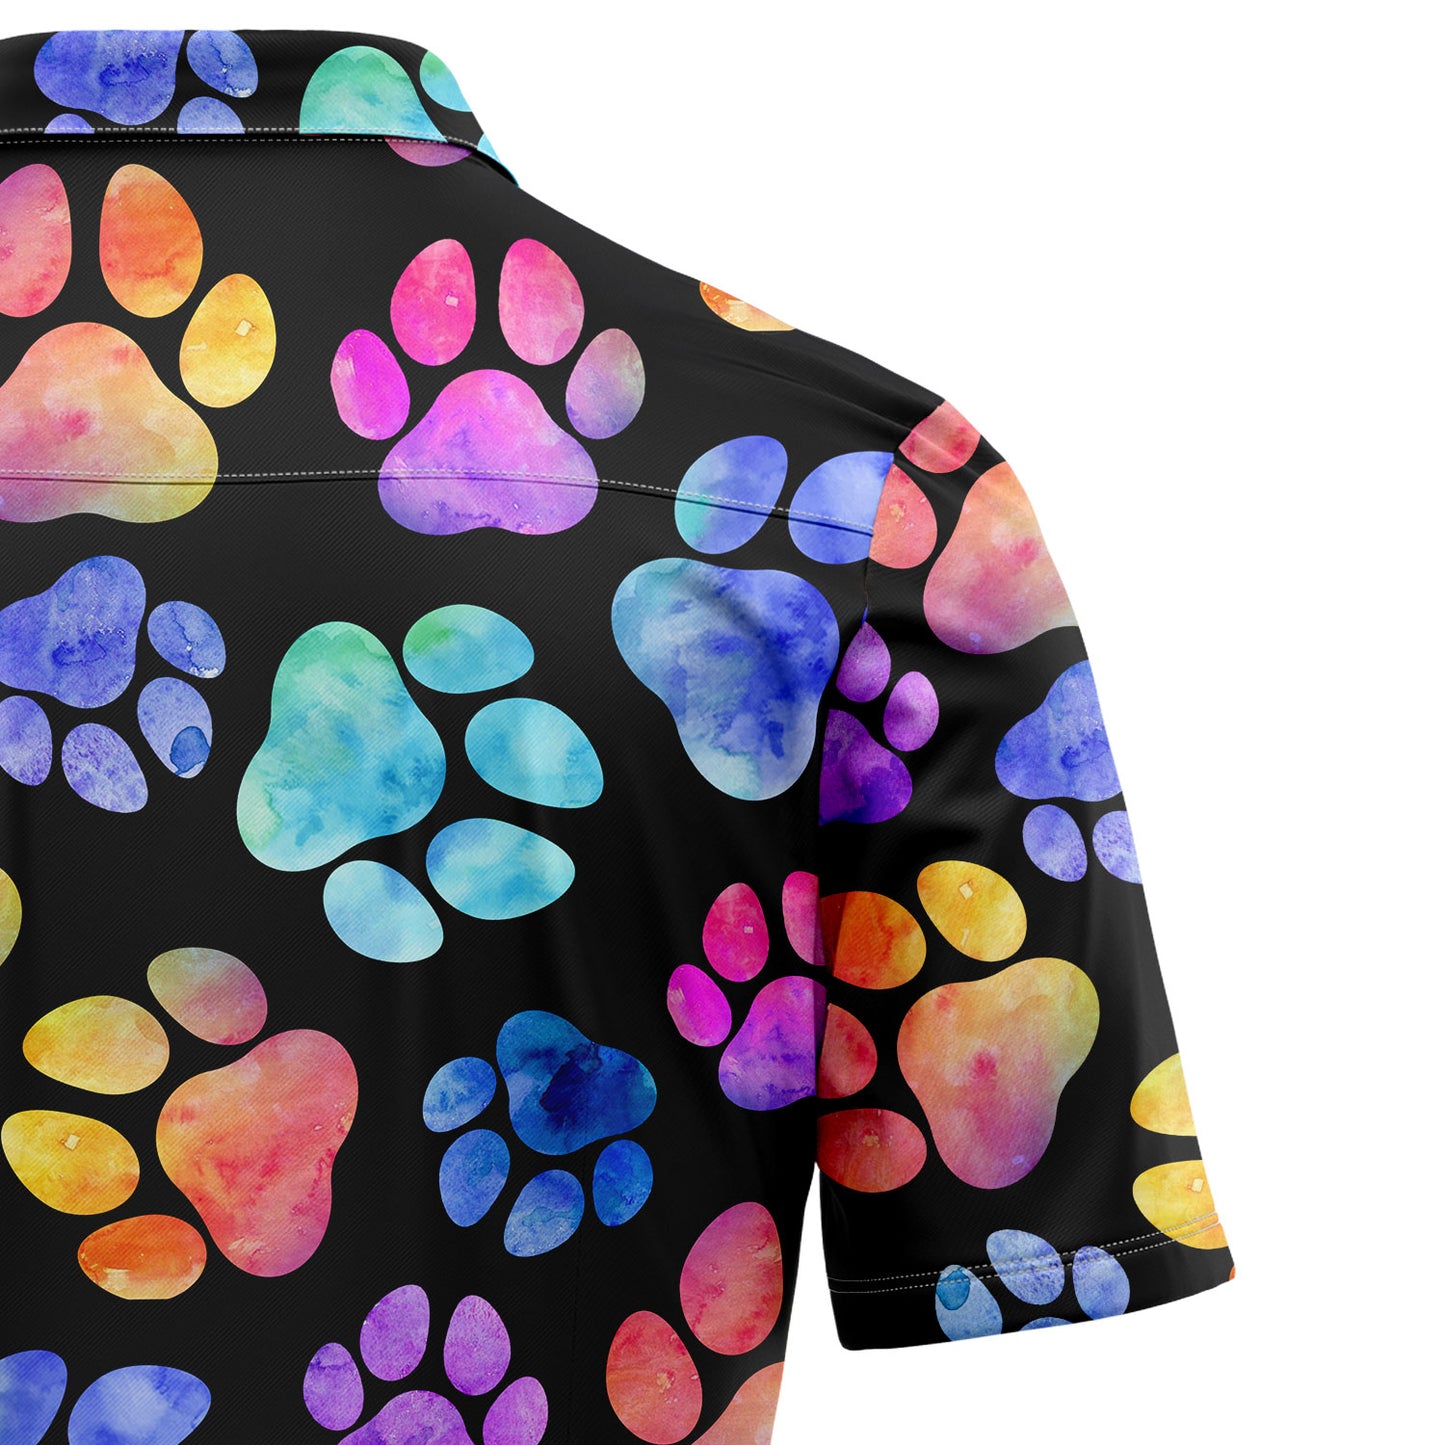 Dog Pawprint Colorful T2107 Hawaiian Shirt